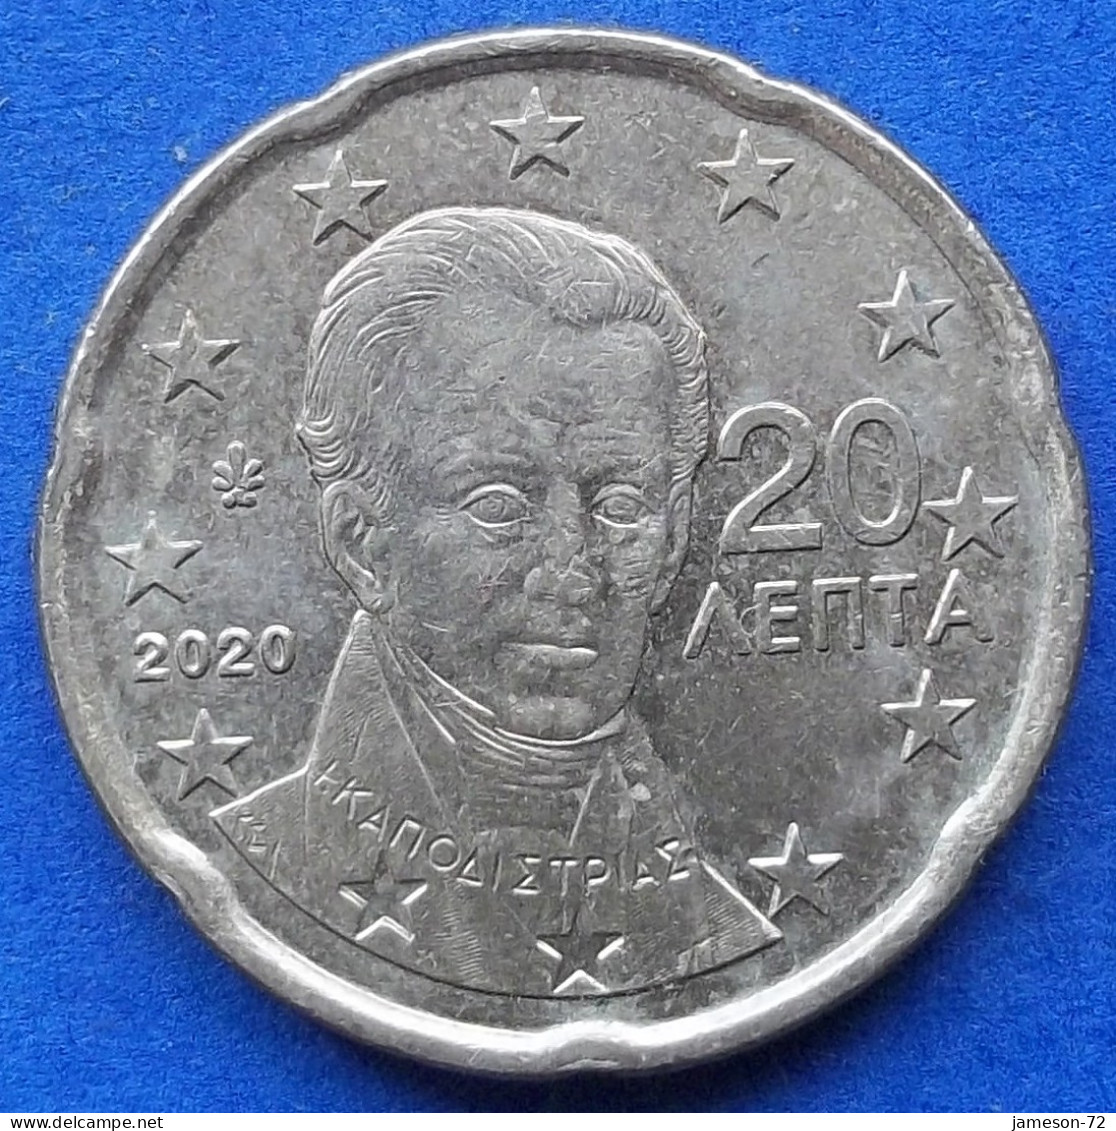 GREECE - 20 Euro Cents 2020 "Ioannis Capodistrias" KM# 212 Euro Coinage (2002) - Edelweiss Coins - Greece